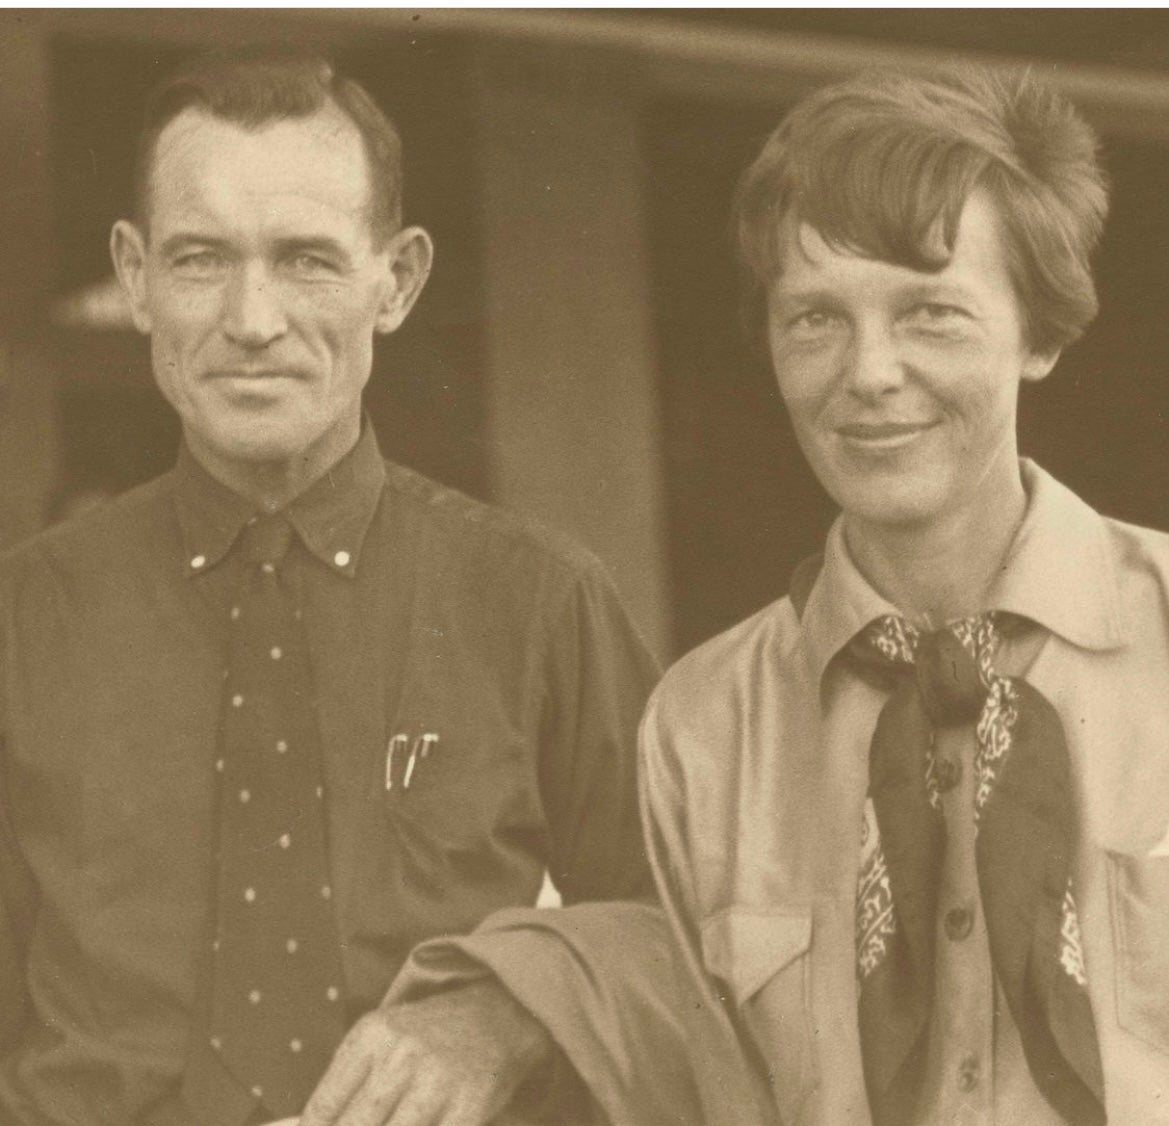 Museum Celebrates the Life of Amelia Earhart